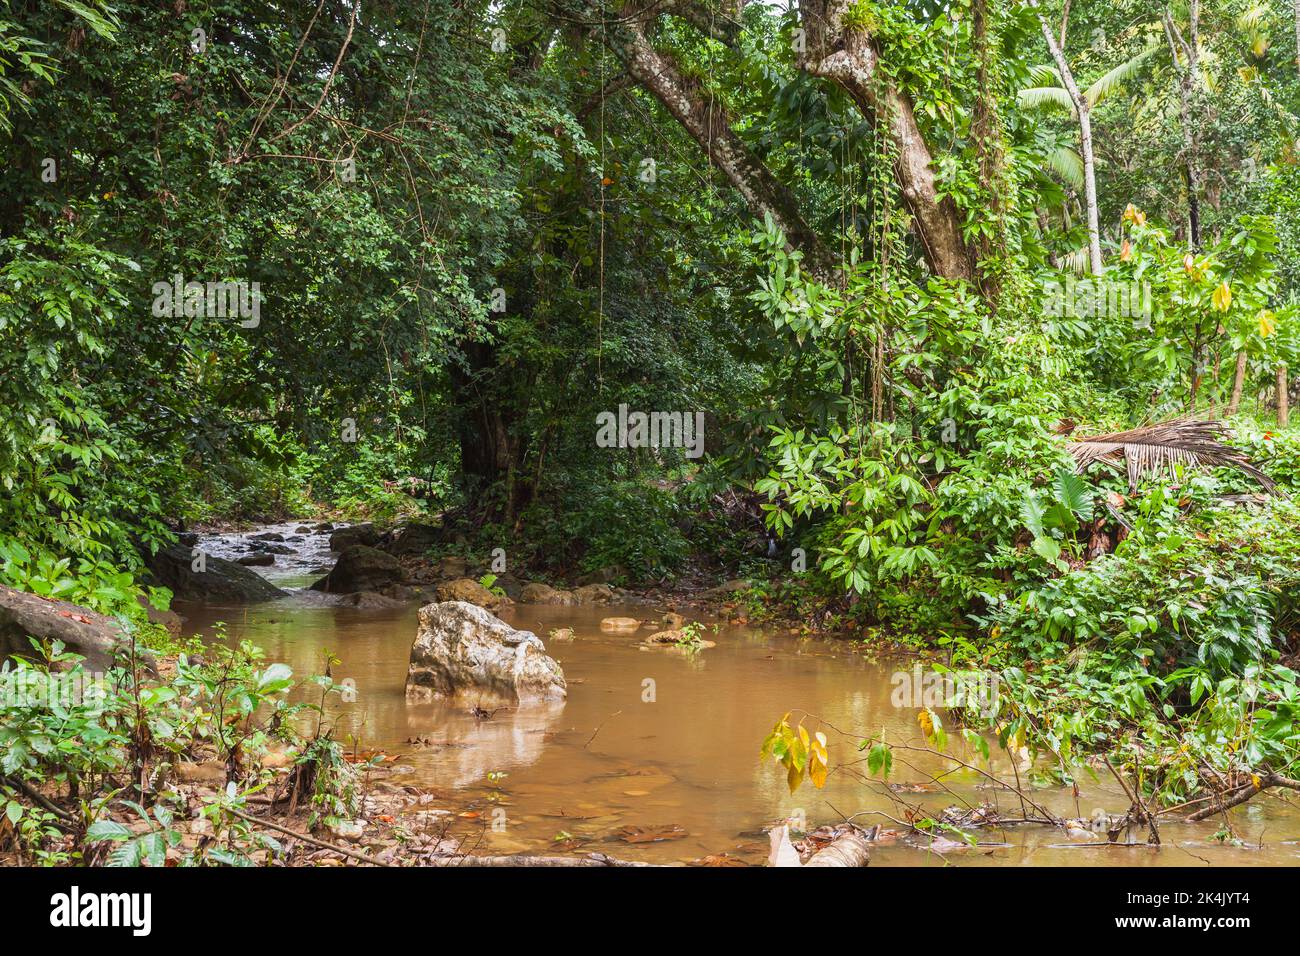 Tropical landscape with a muddy river going through dark rainforest. Samana, Dominican Republic Stock Photo